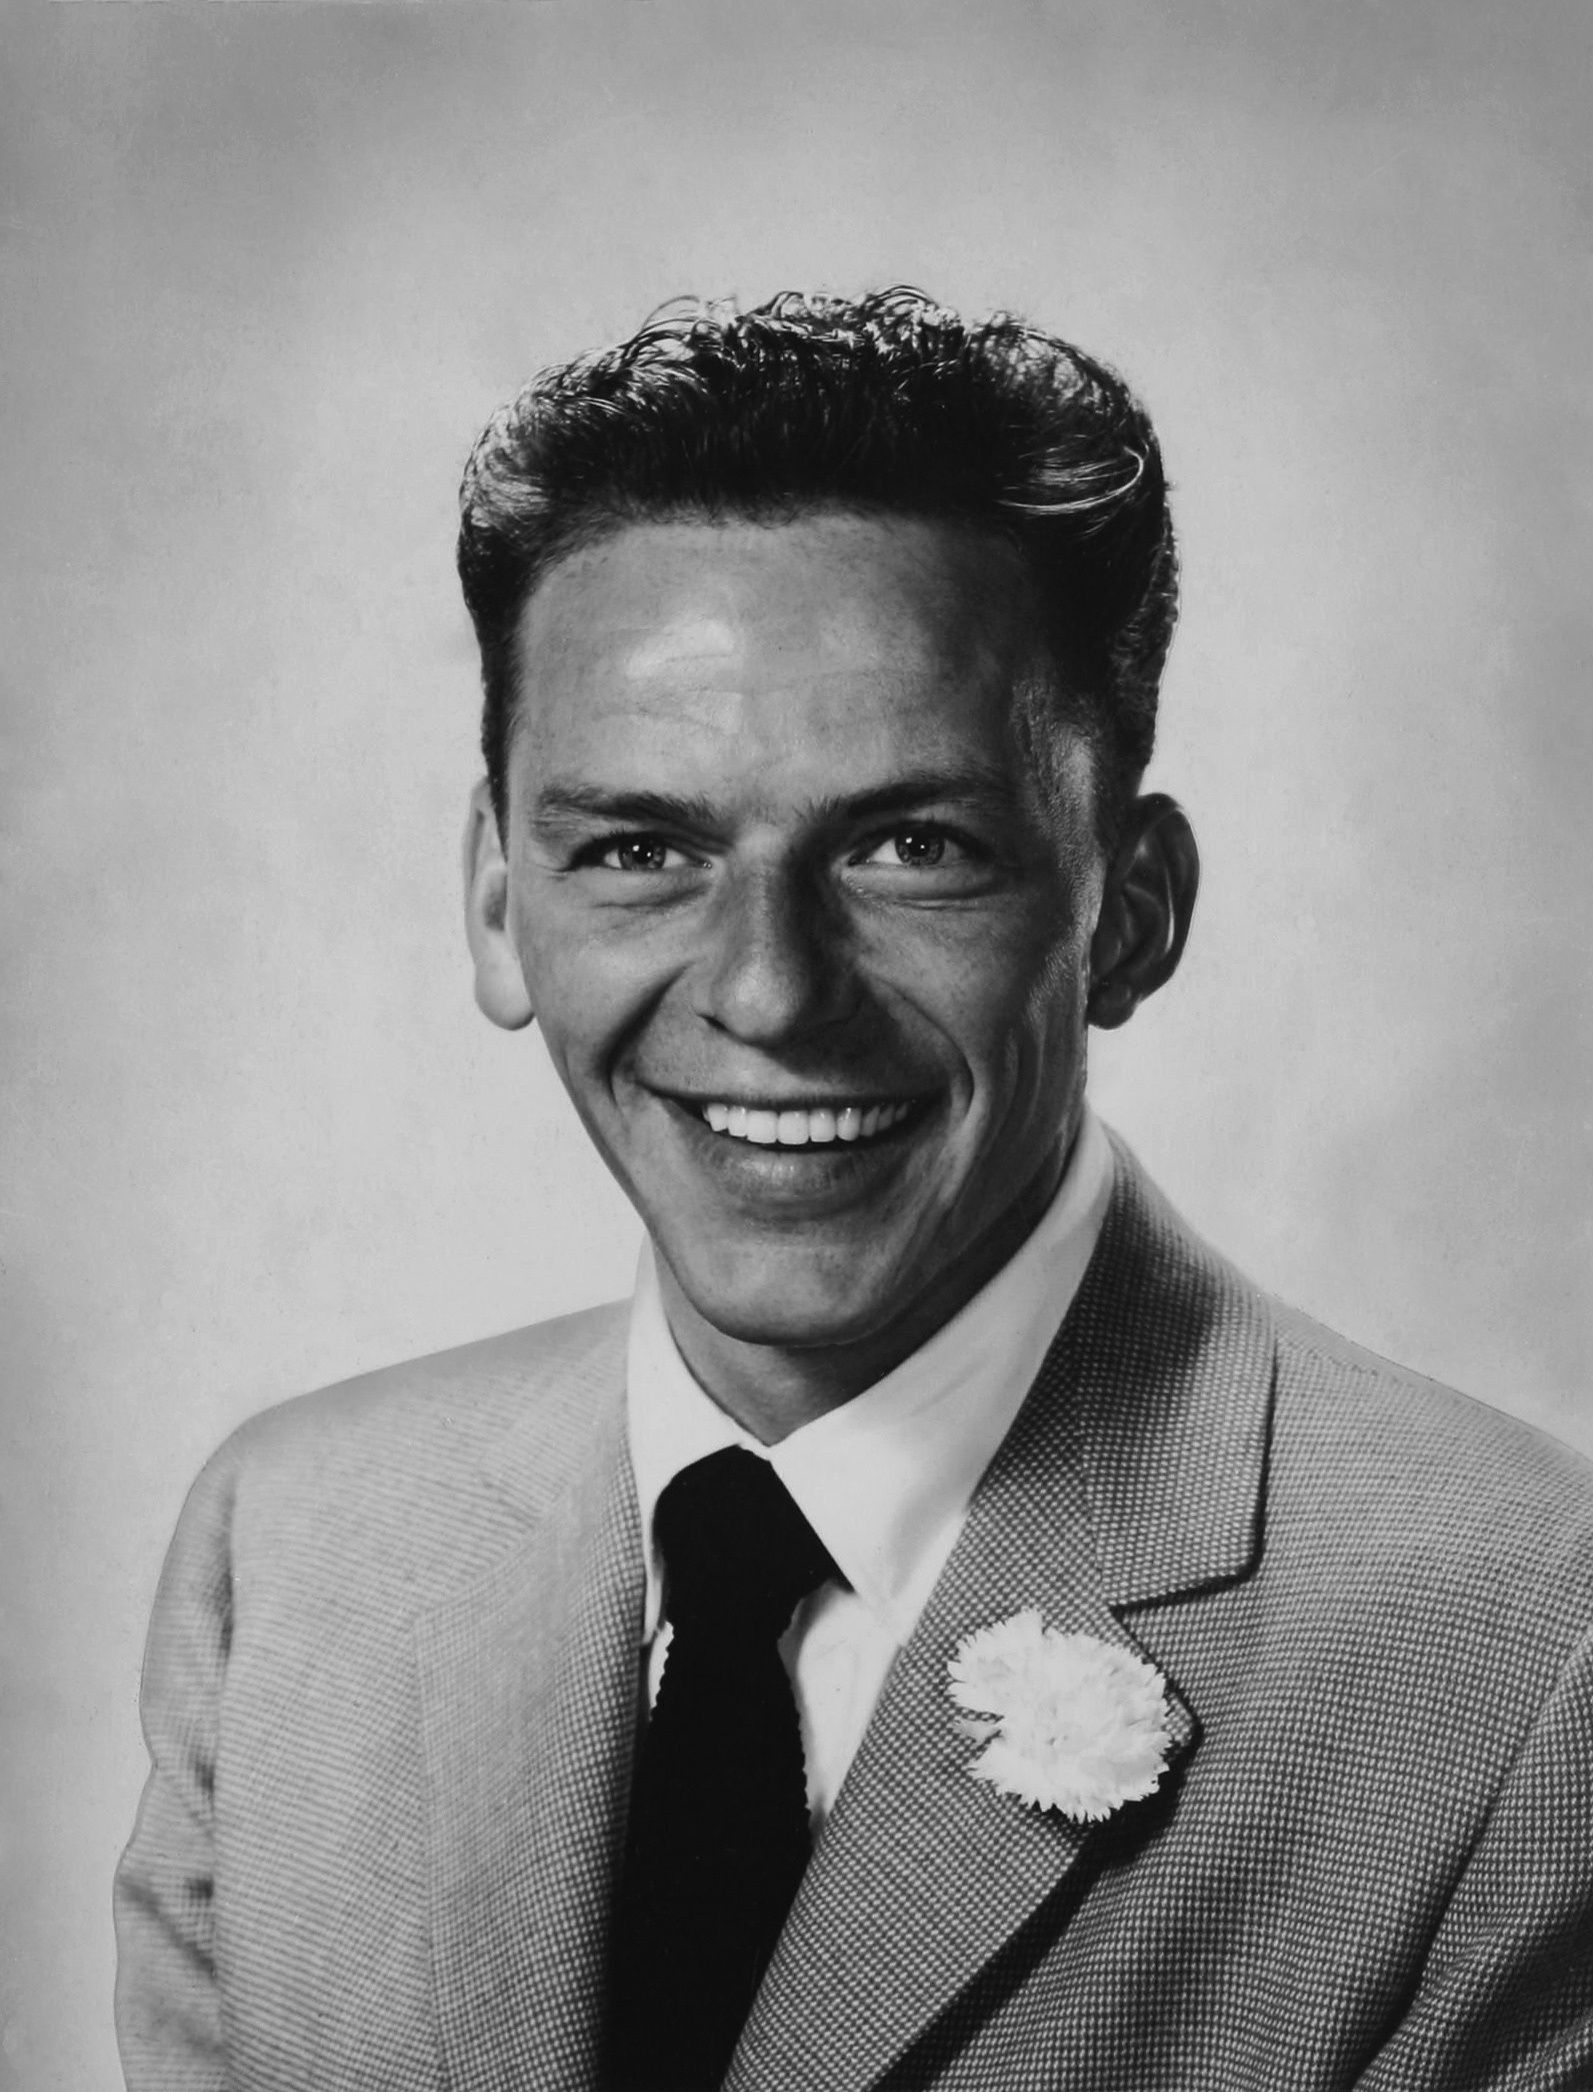 Frank Sinatra photo, pics, wallpaper - photo #332089